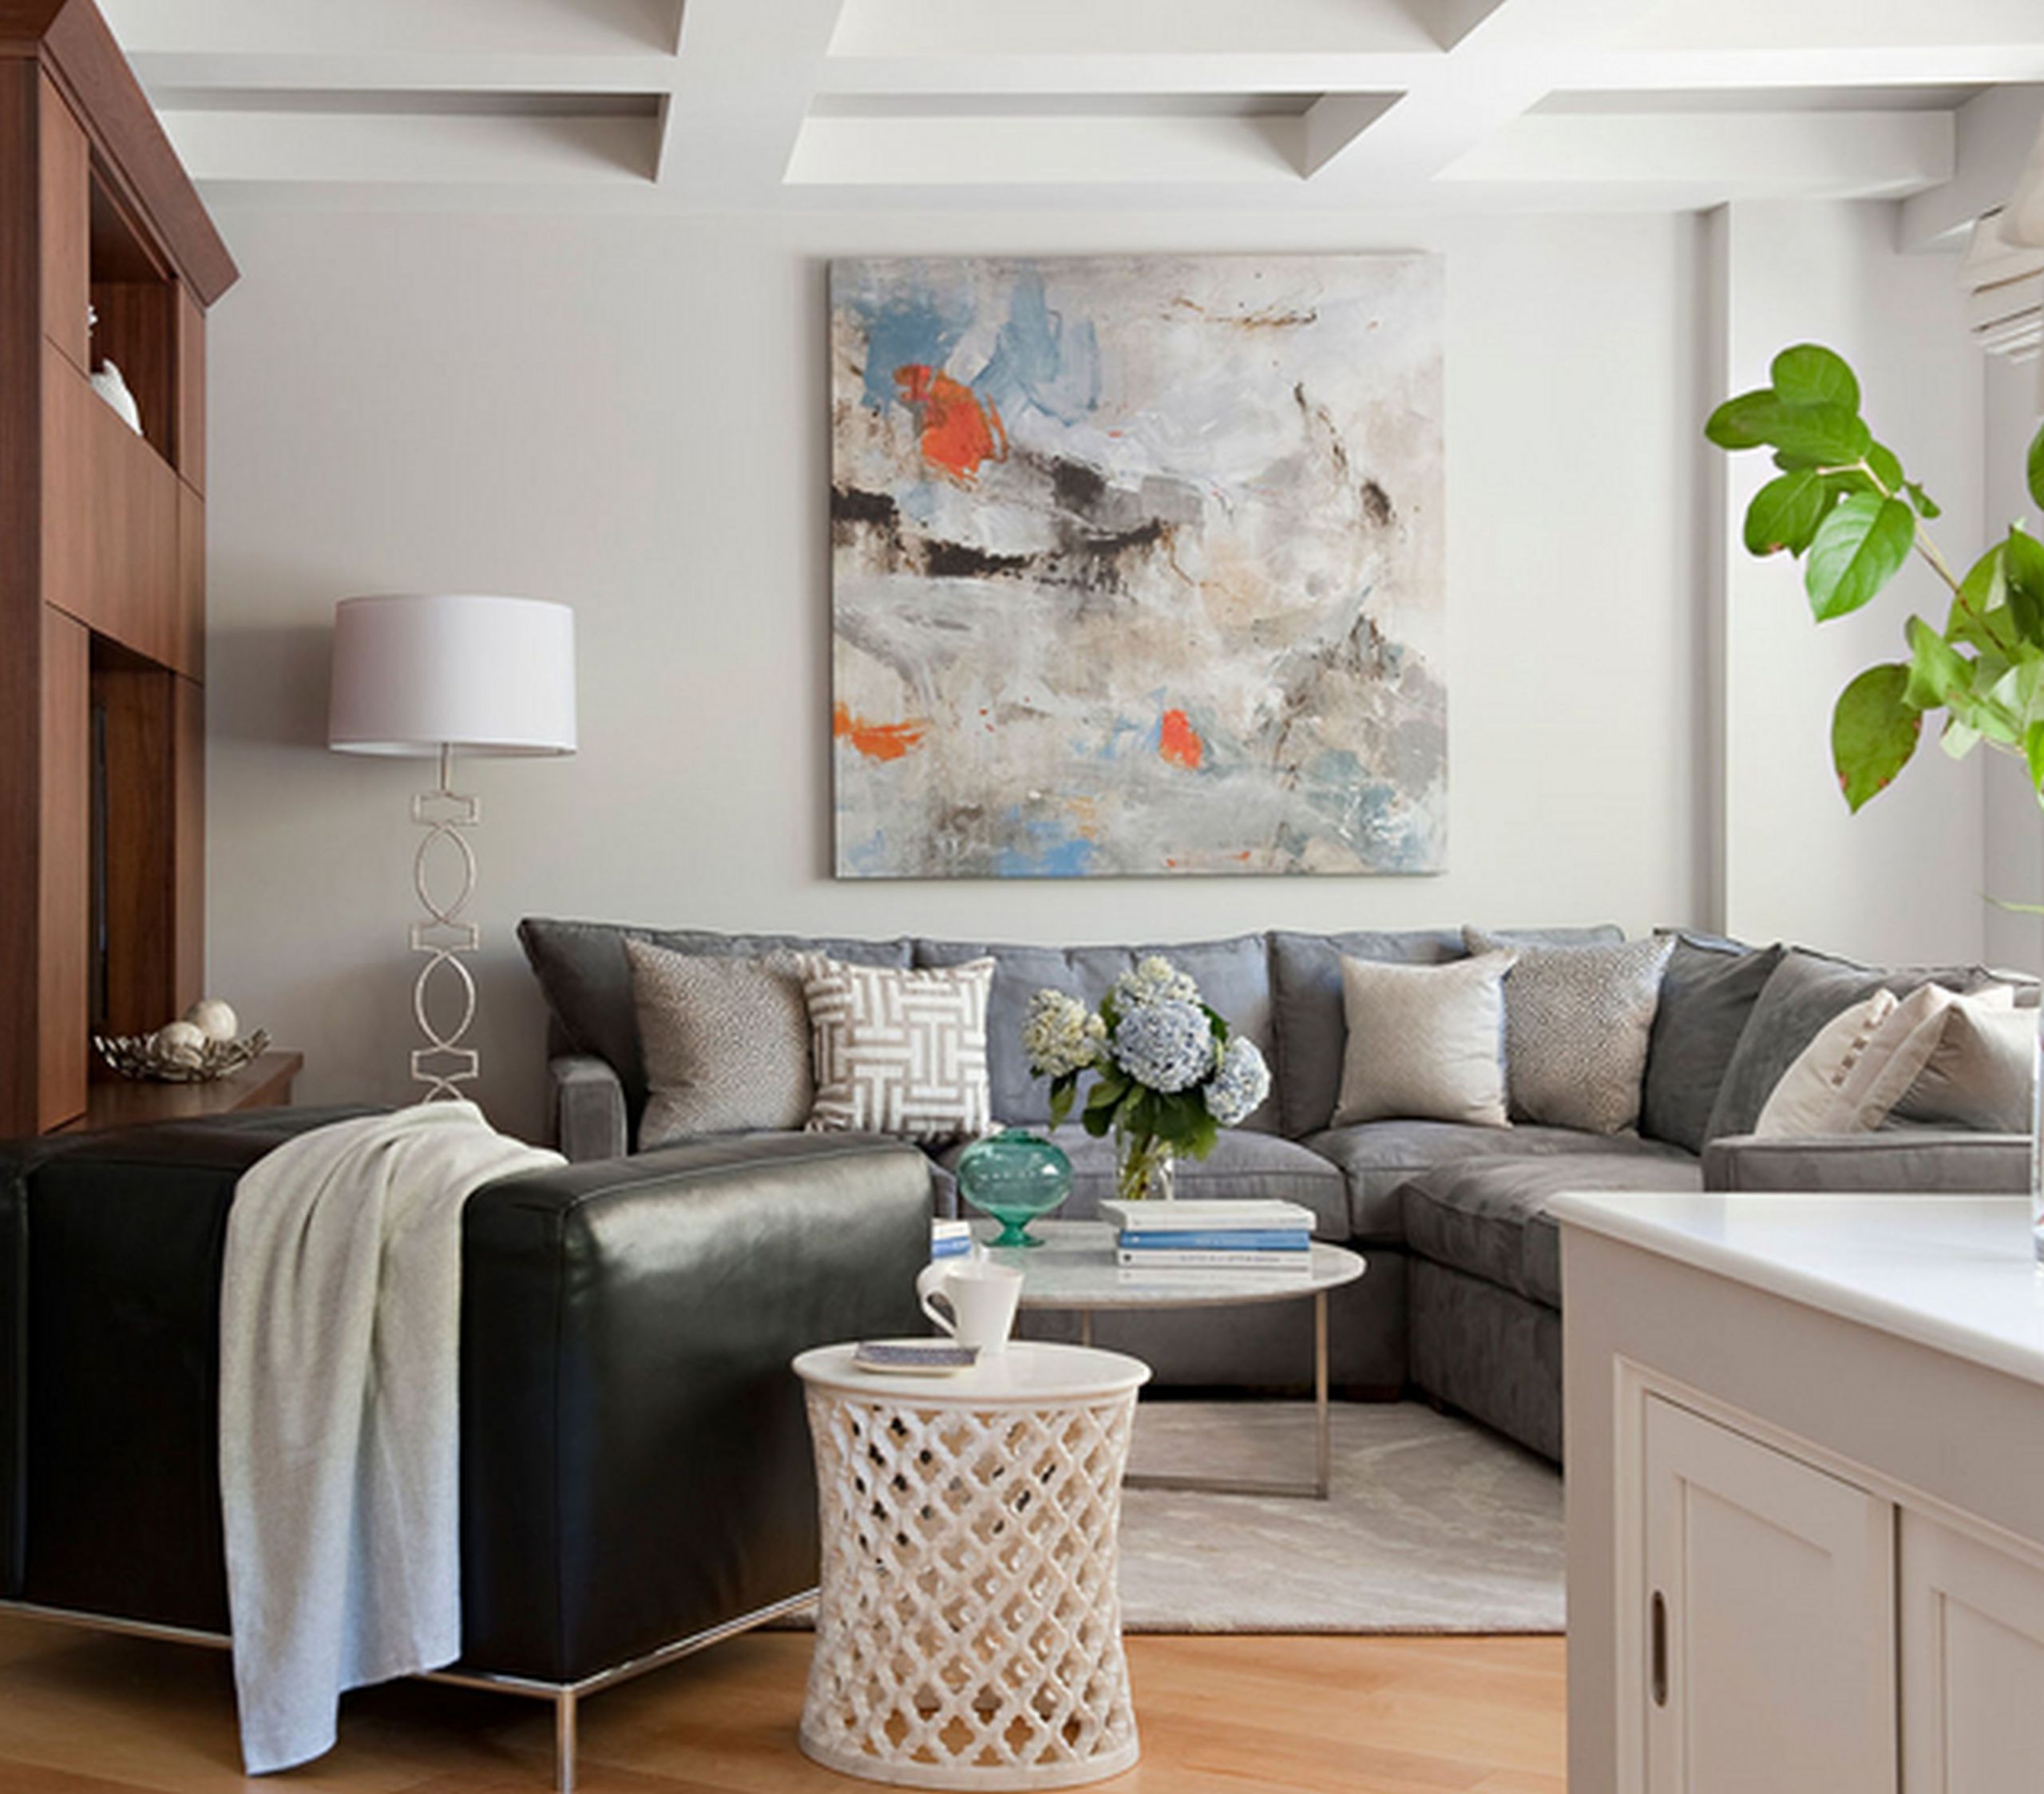 Sofa For Small Living Room
 Living Room Ideas with Sectionals Sofa for Small Living